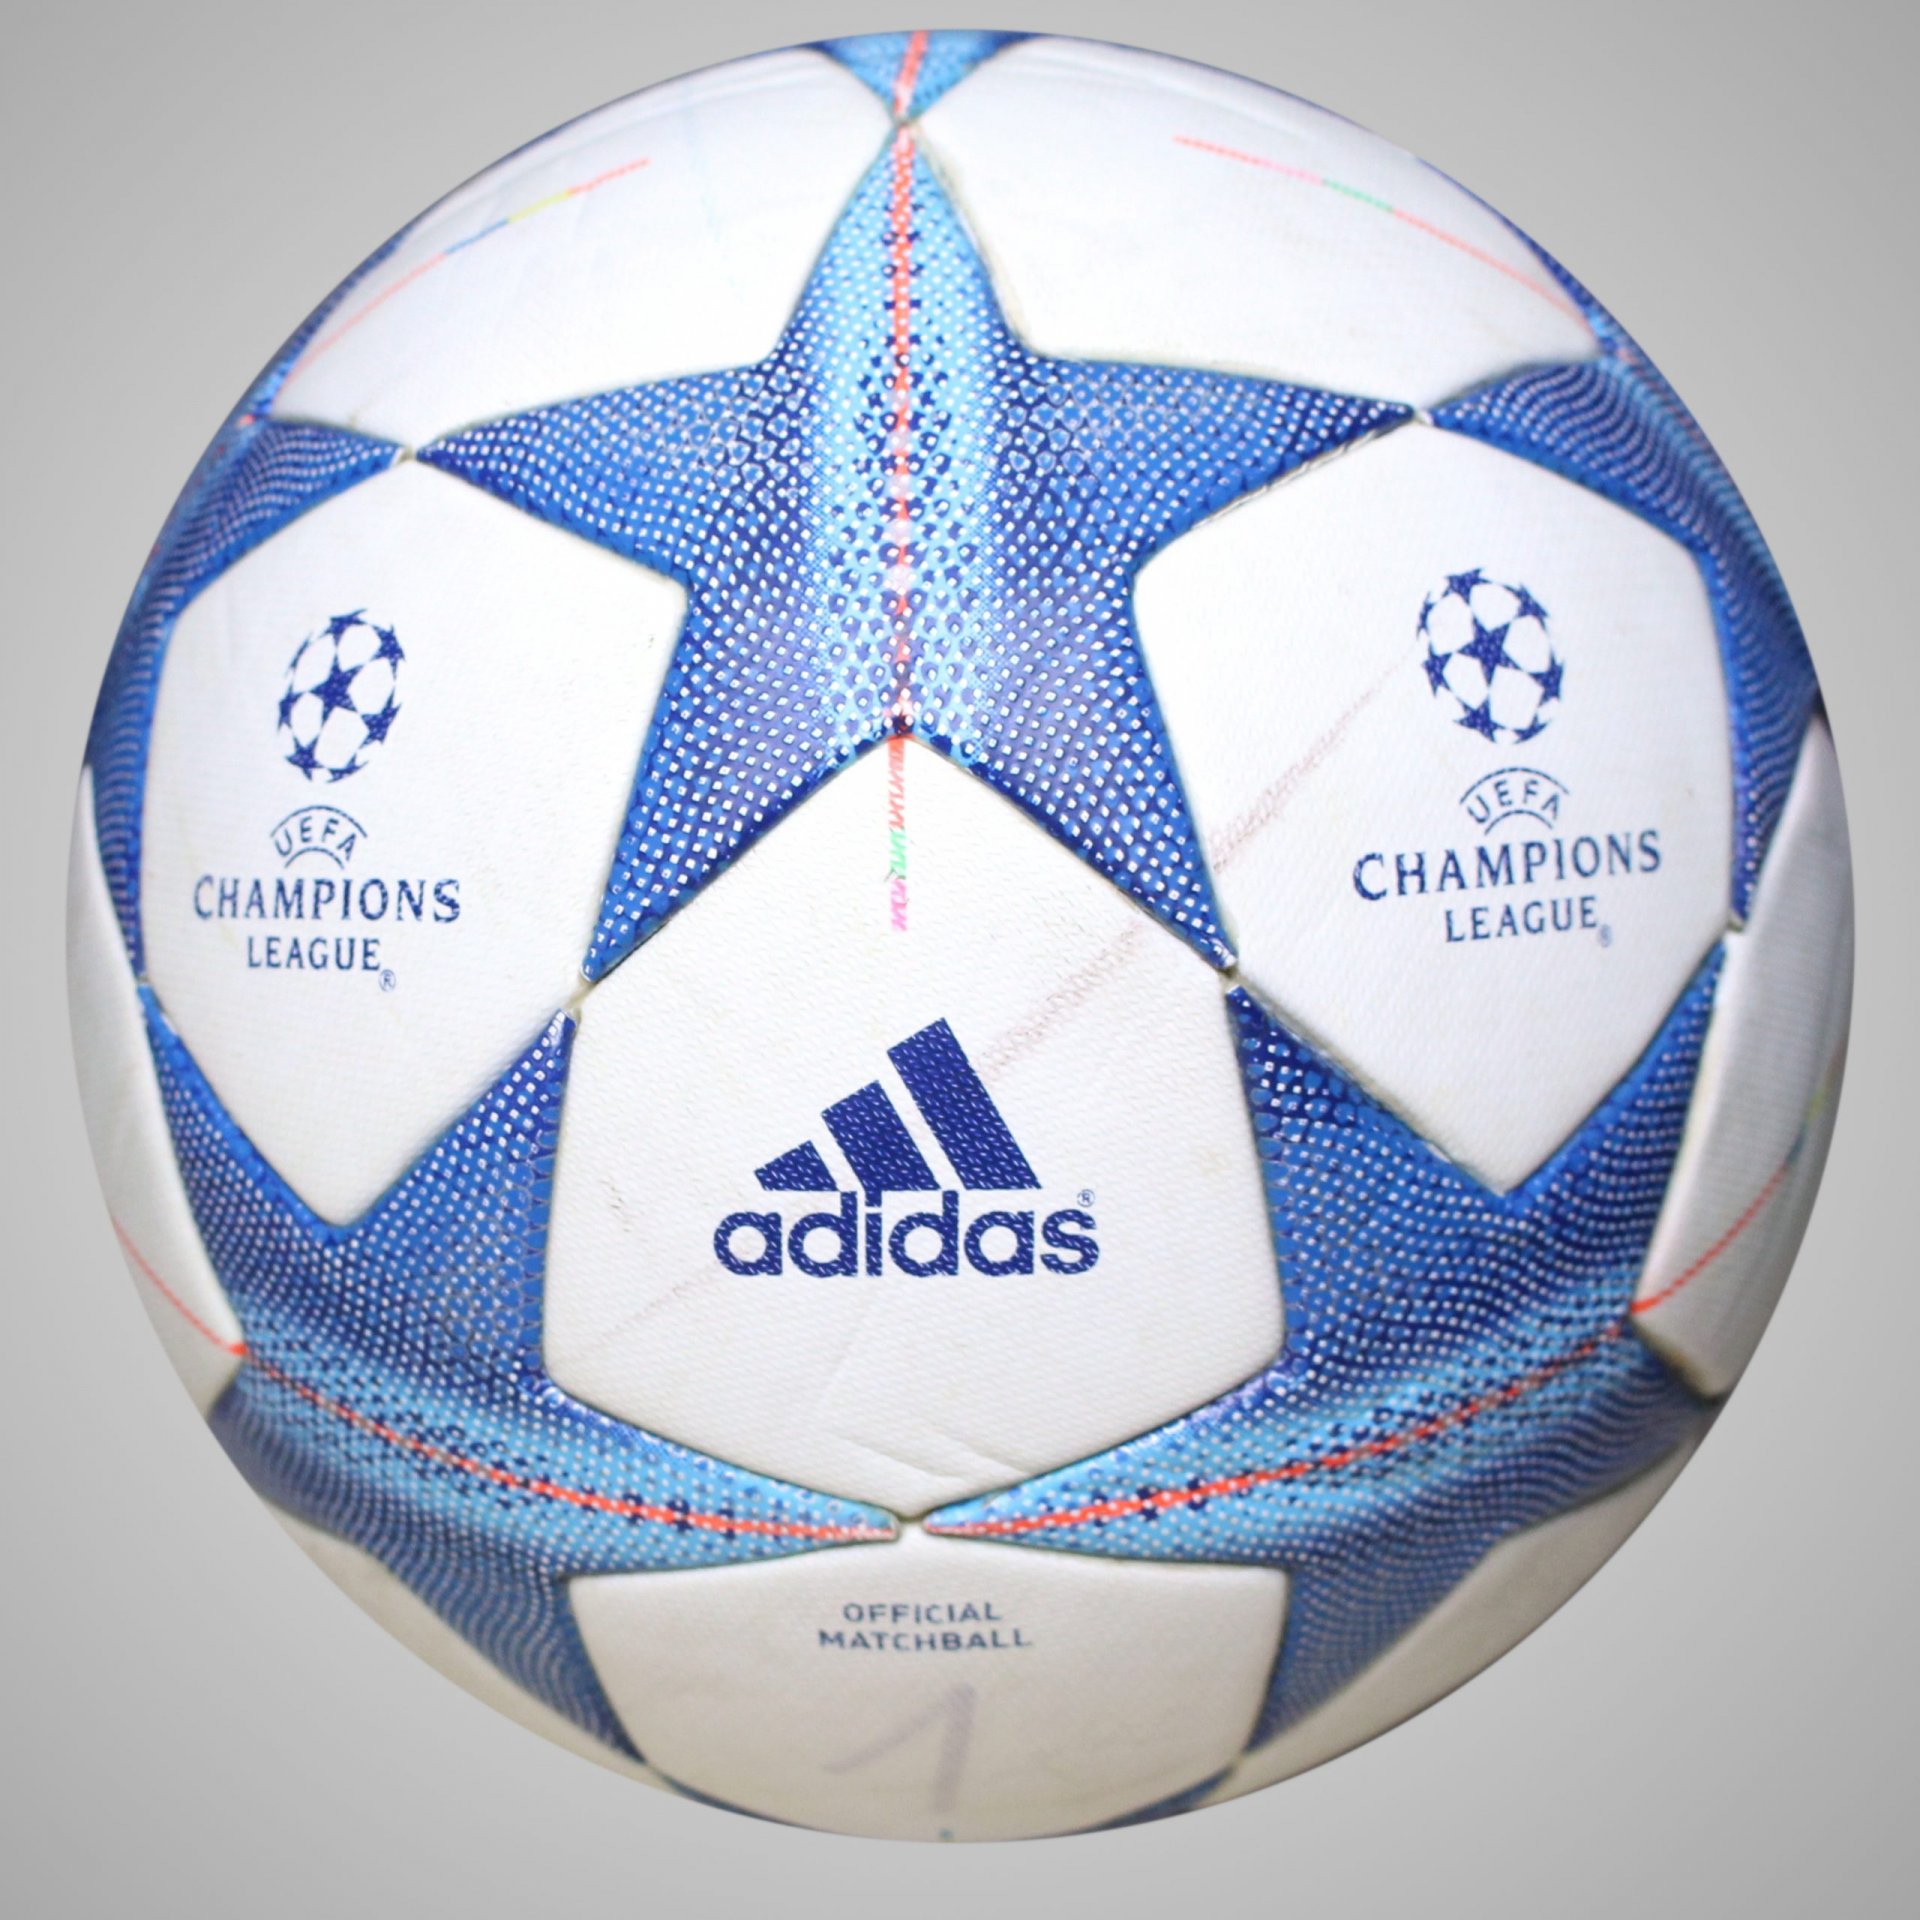 Adidas Champions League 2016 Official Matchball